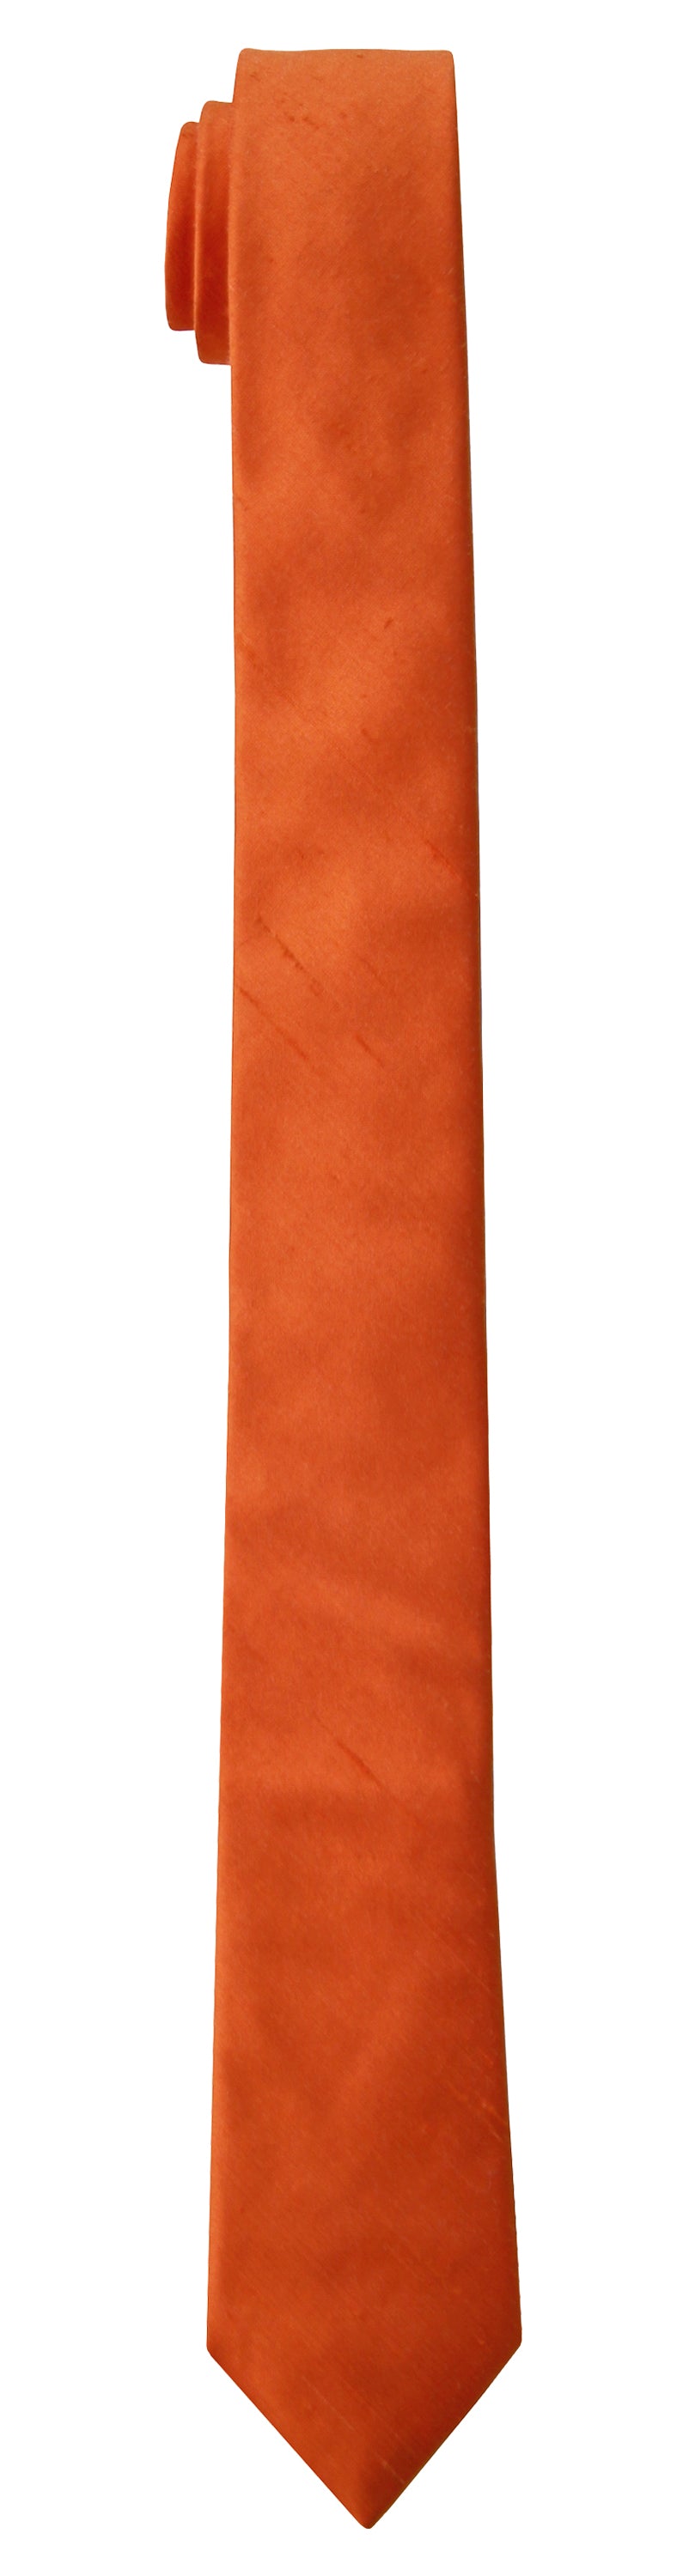 Mimi Fong Skinny Tie in Orange